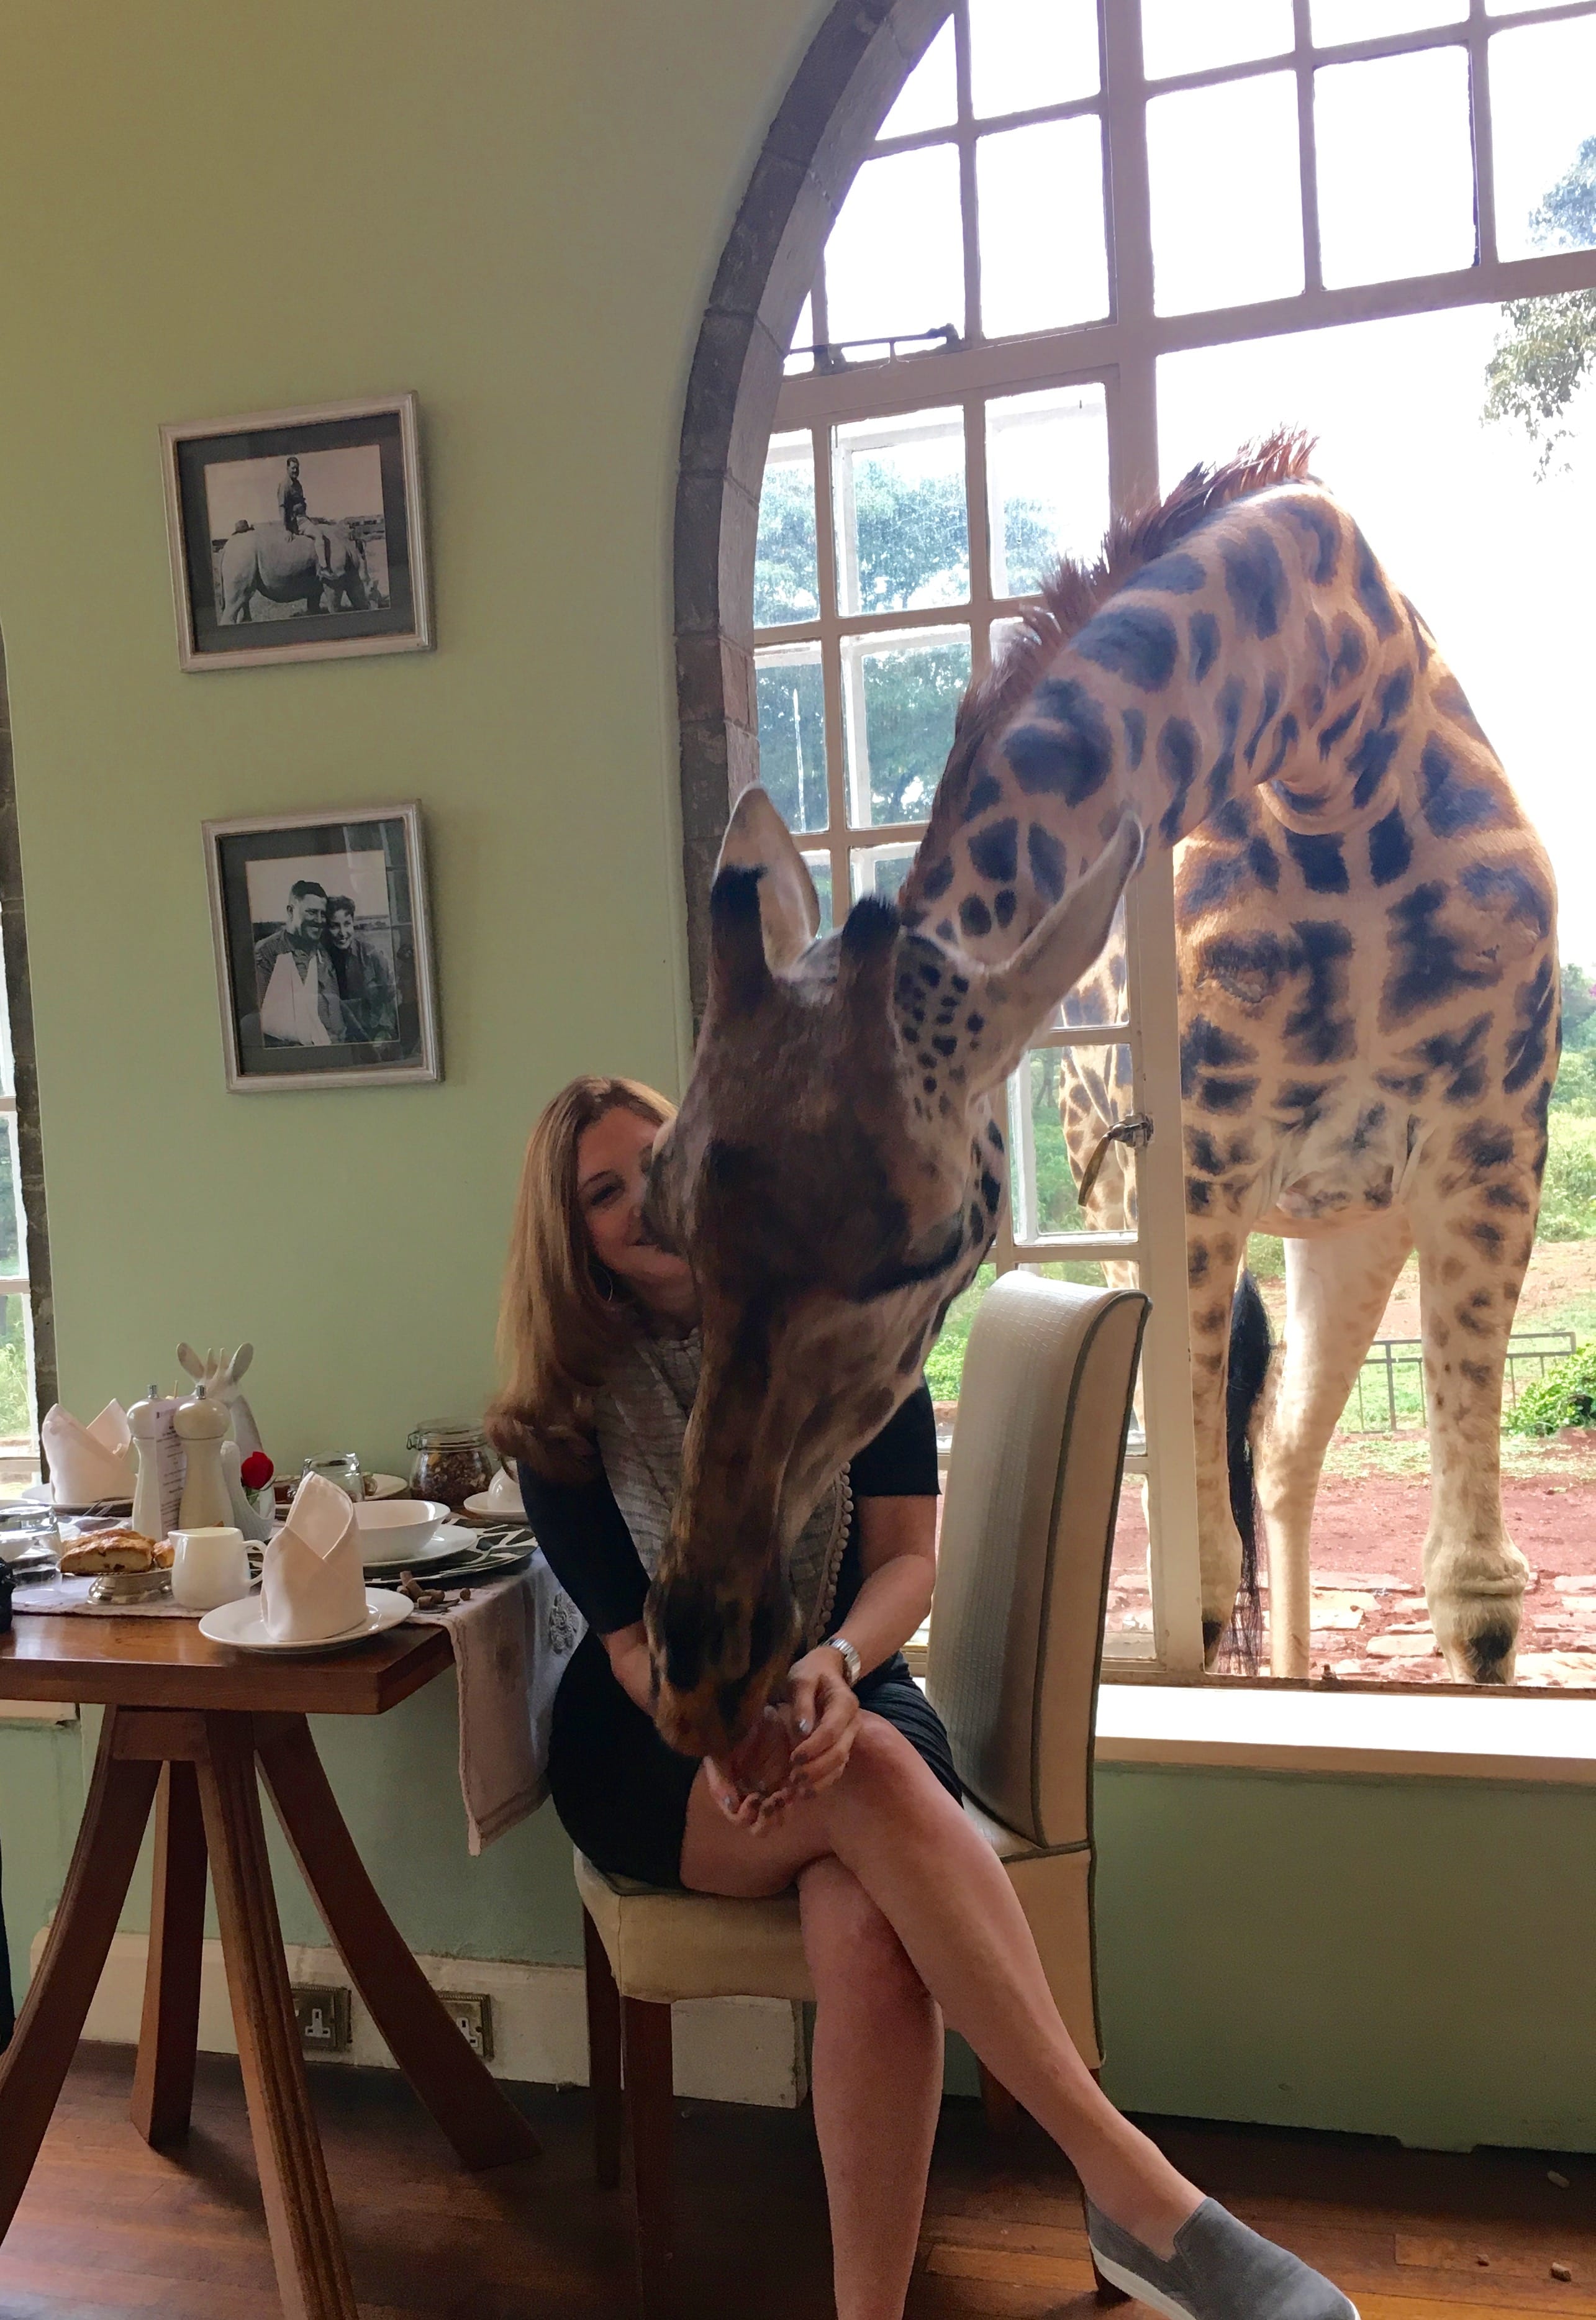 Return to Giraffe Manor in Kenya